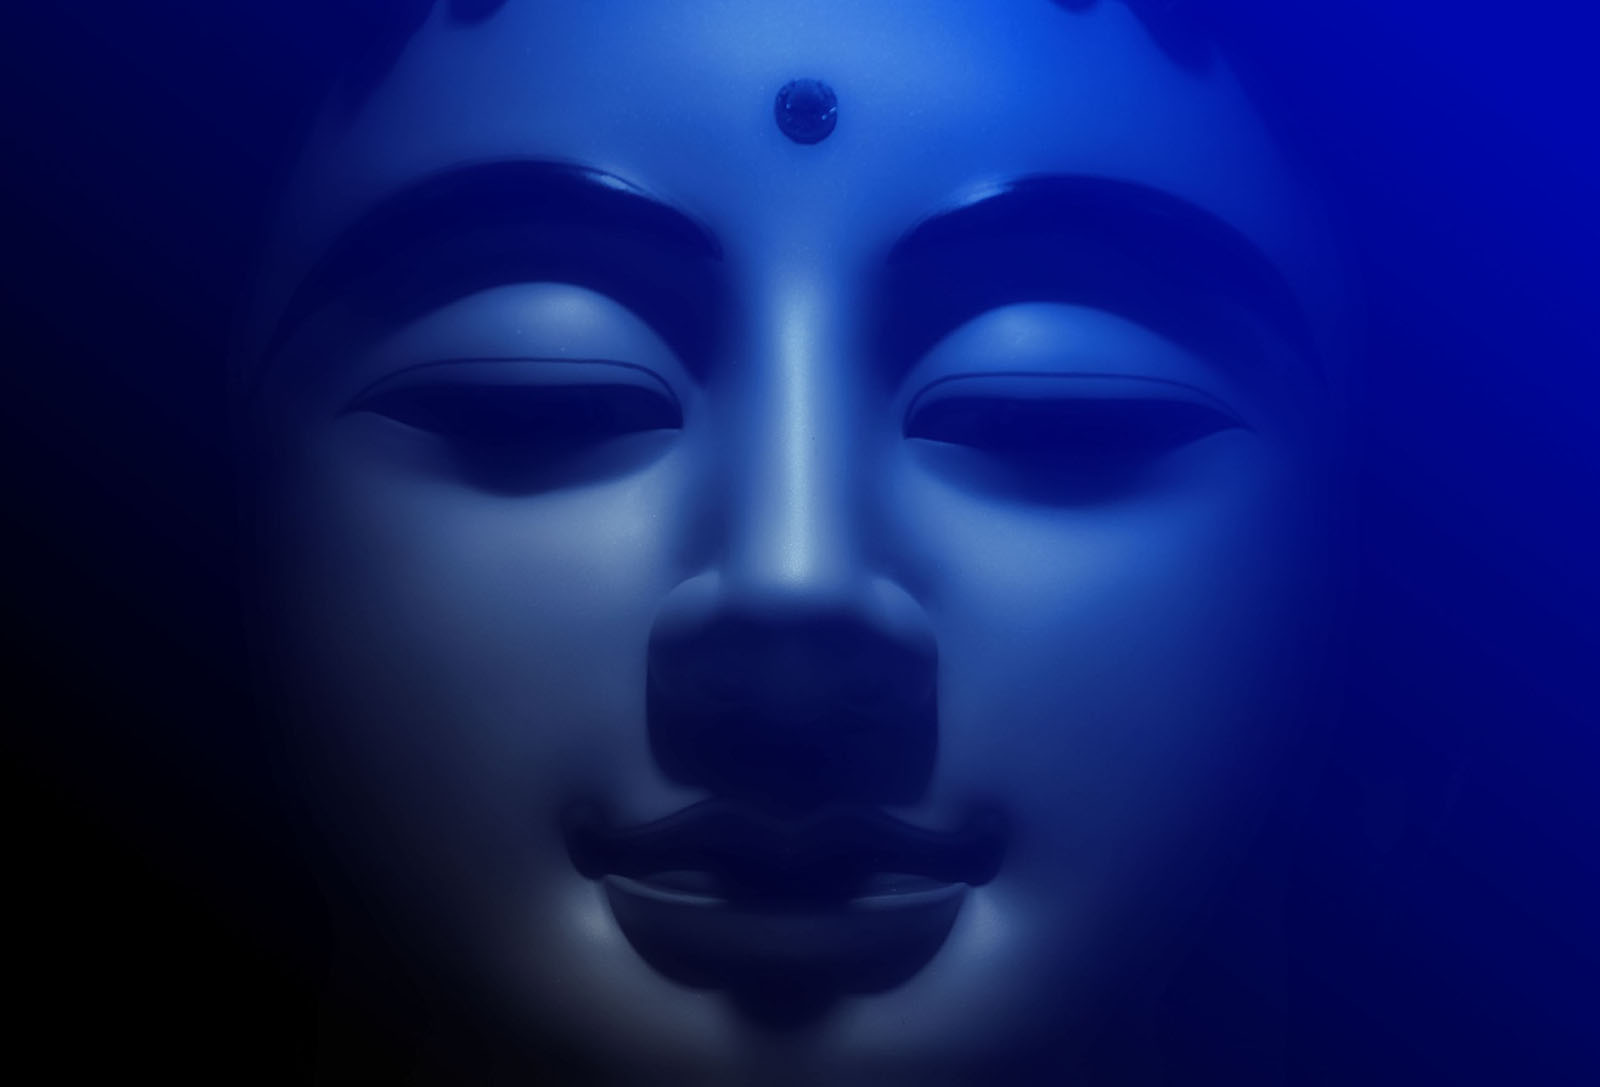 Medicine buddha mantra image